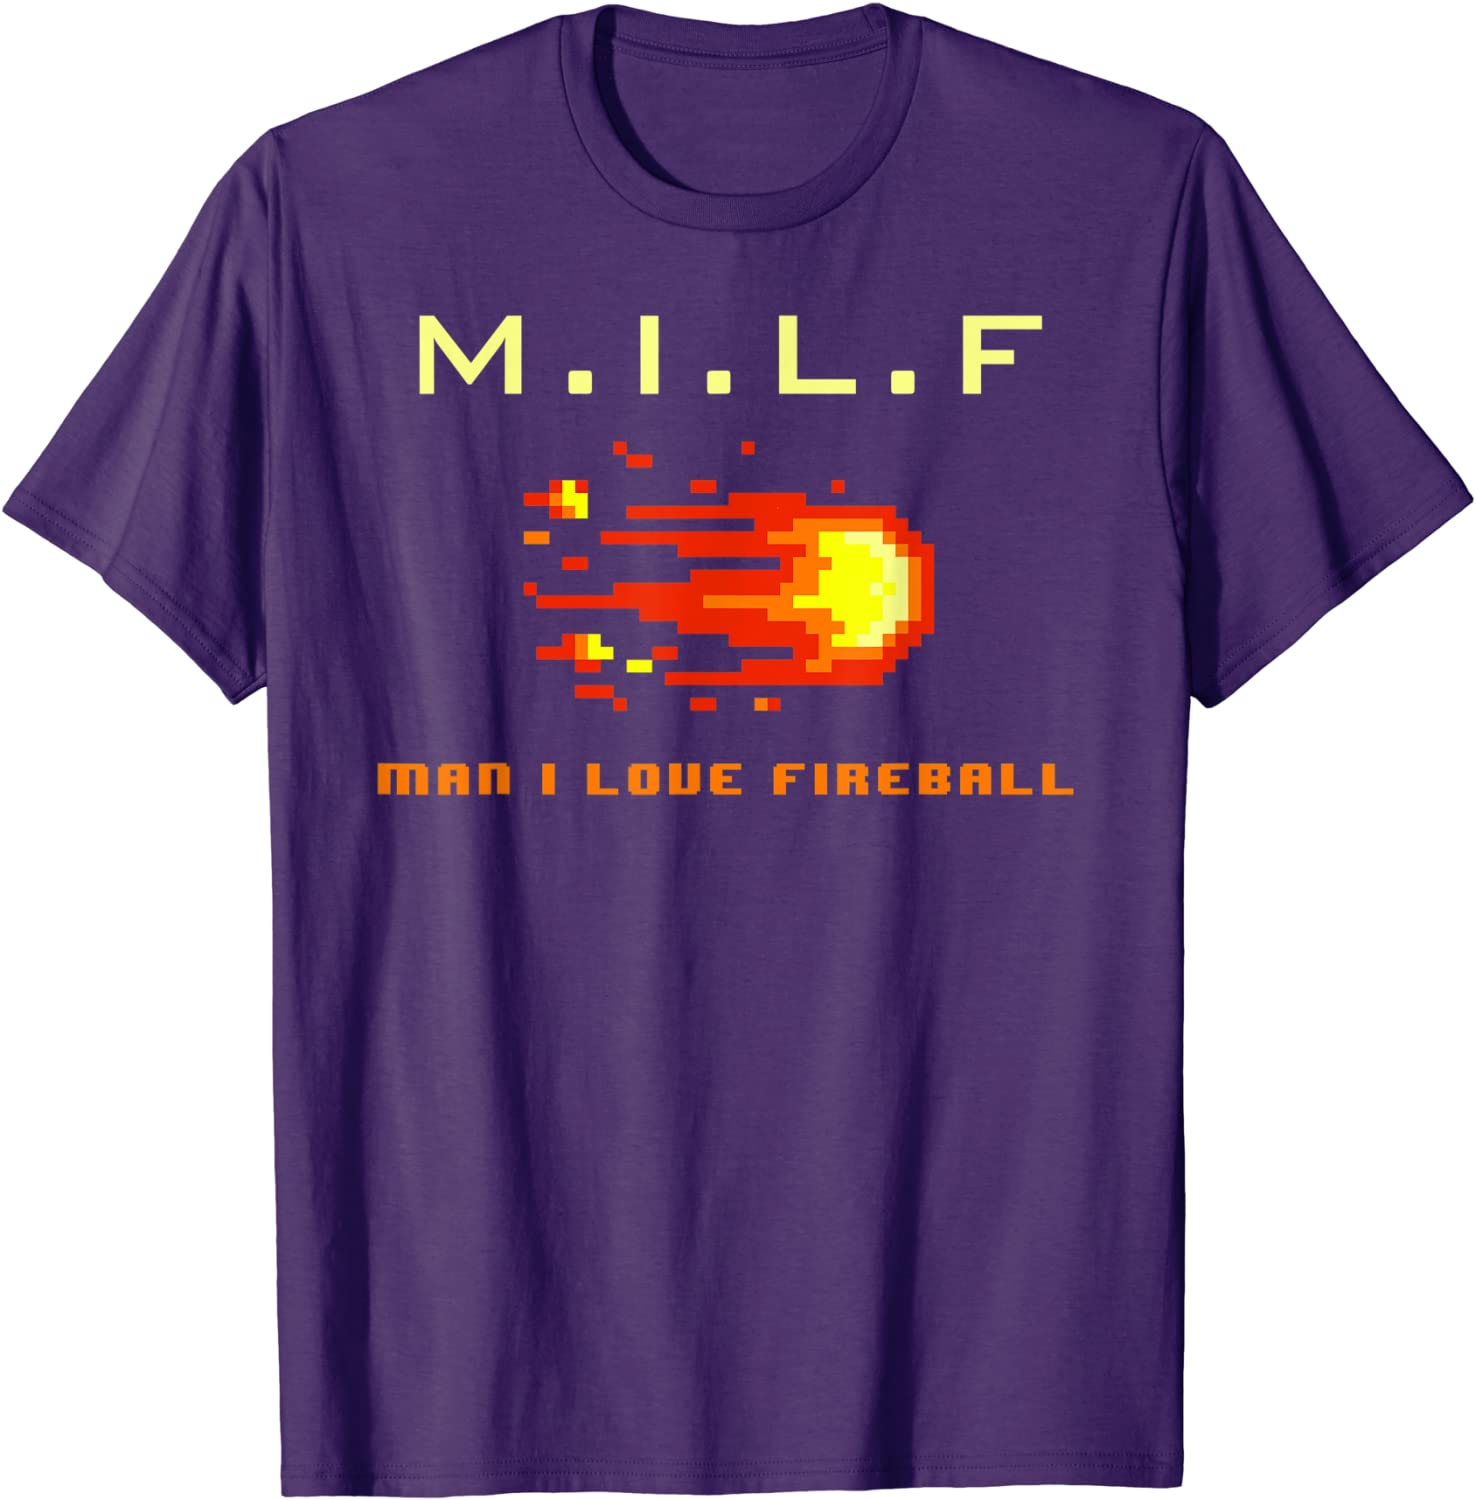 Fireball Enthusiast MILF Graphic Tee DZT